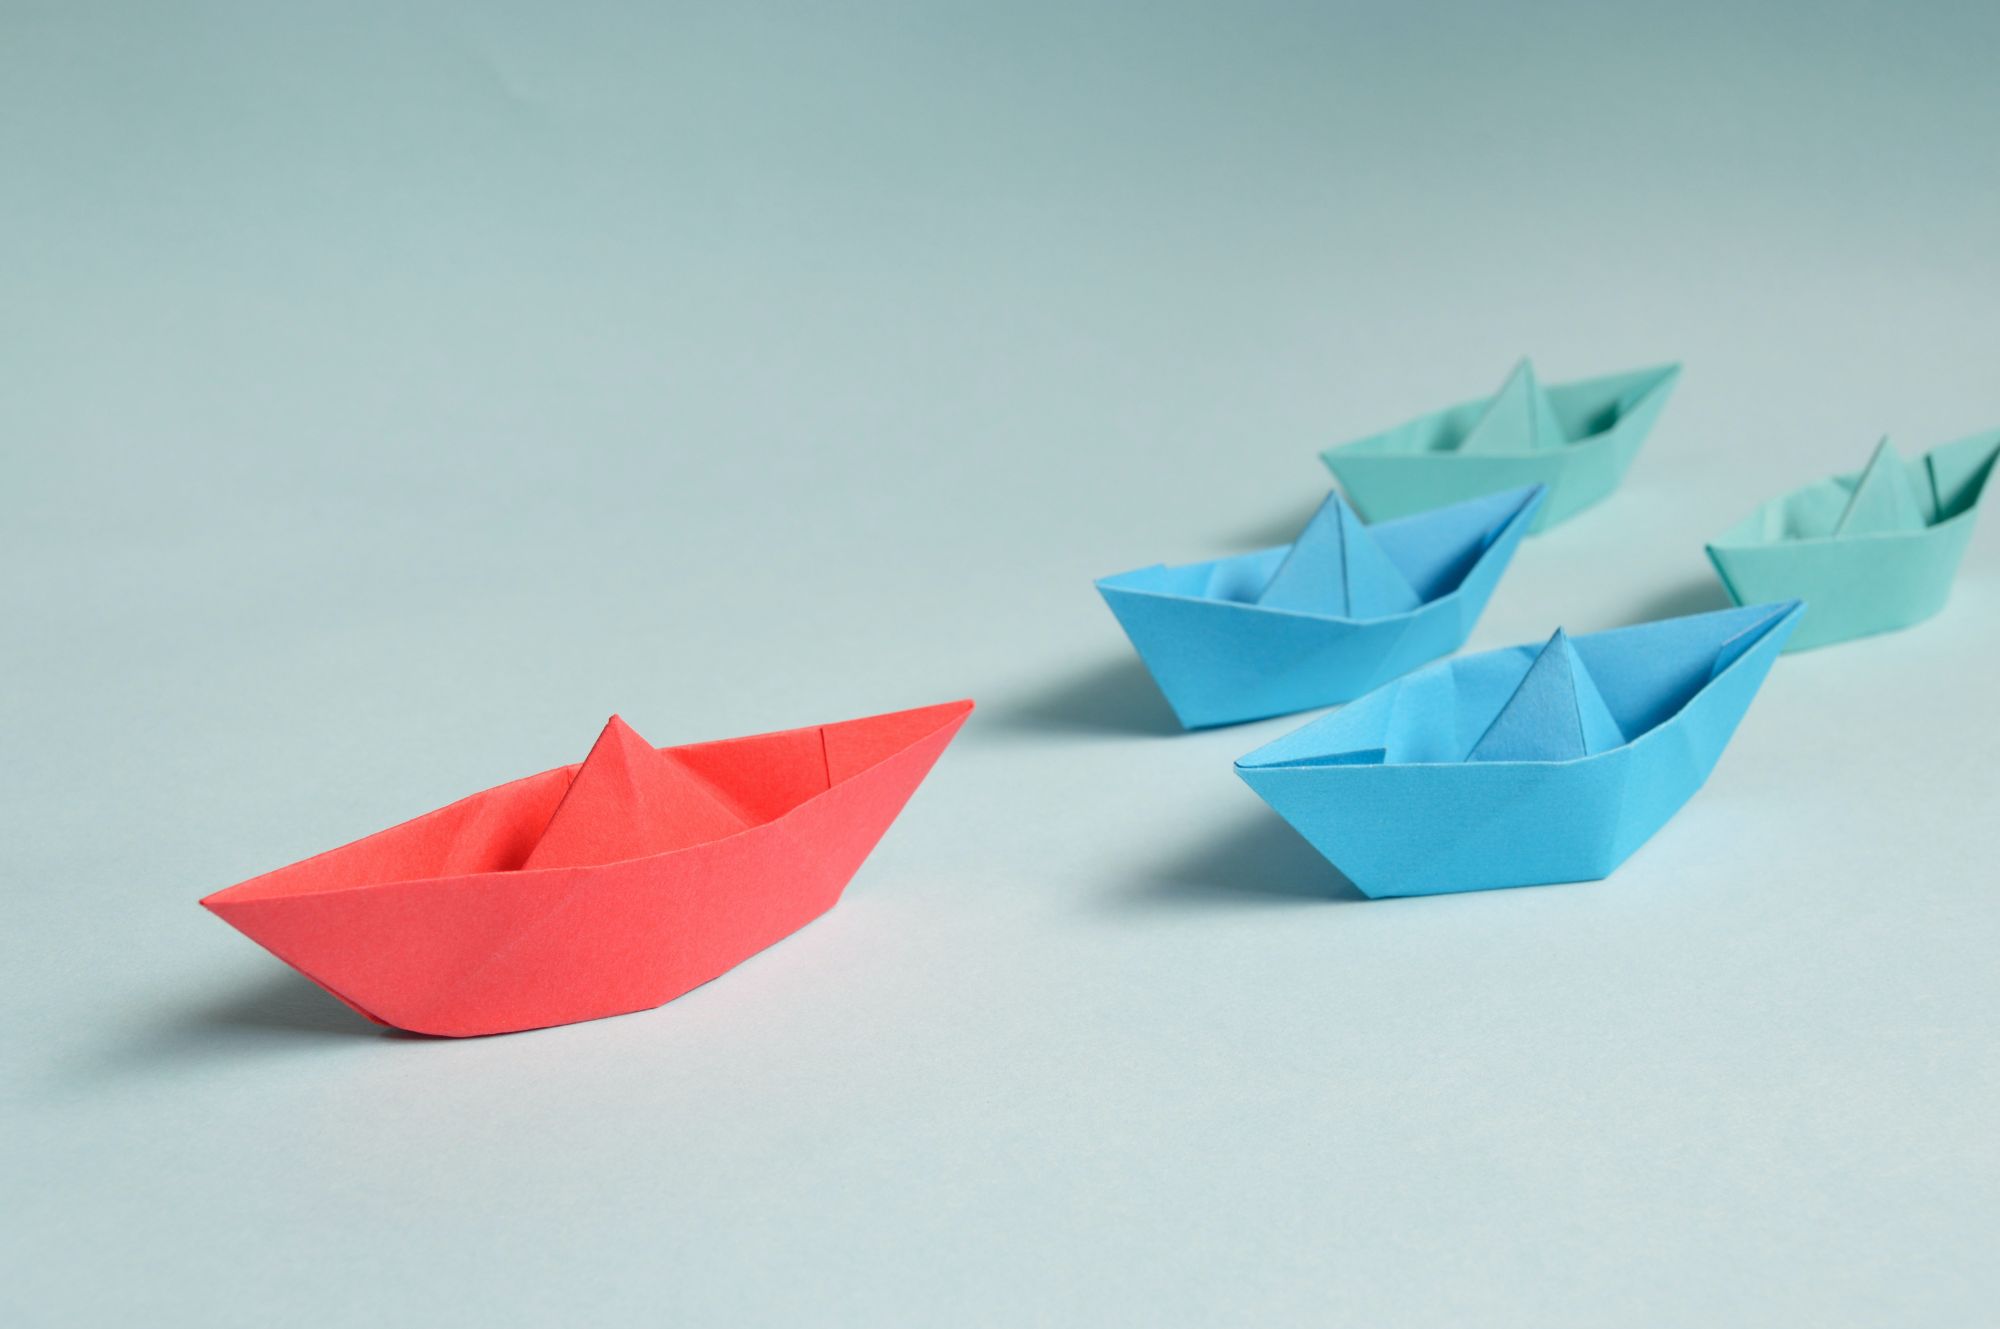 paper boats denoting leadership of teams